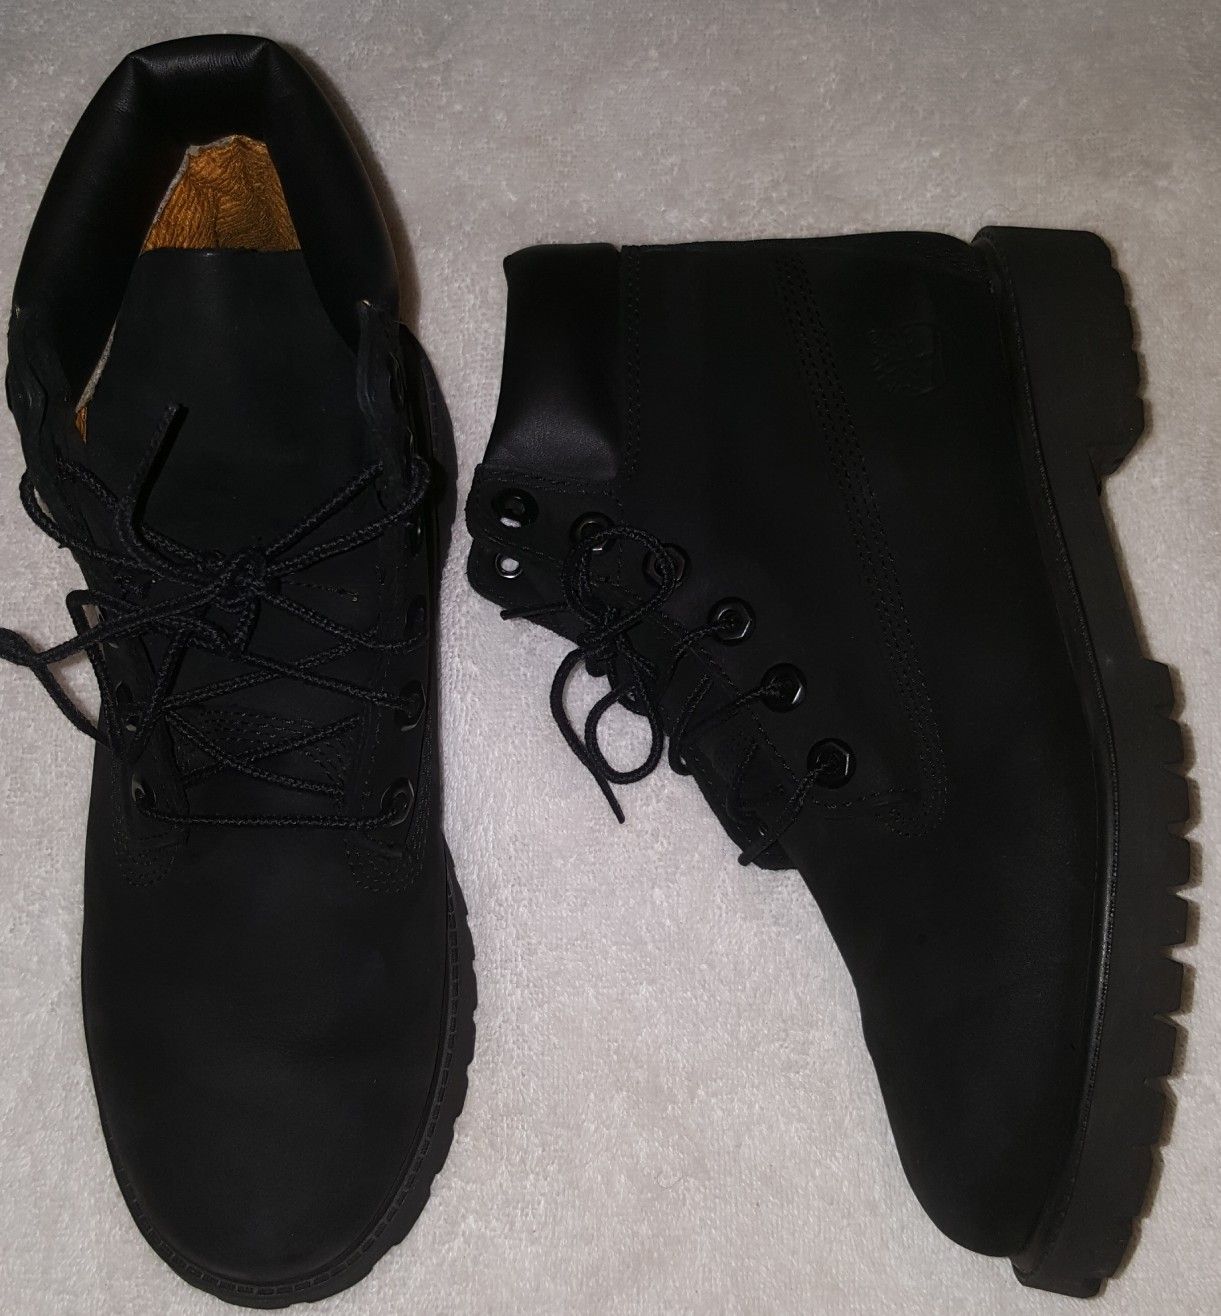 Timberlands boots "Black suede"/ Sz 5.5